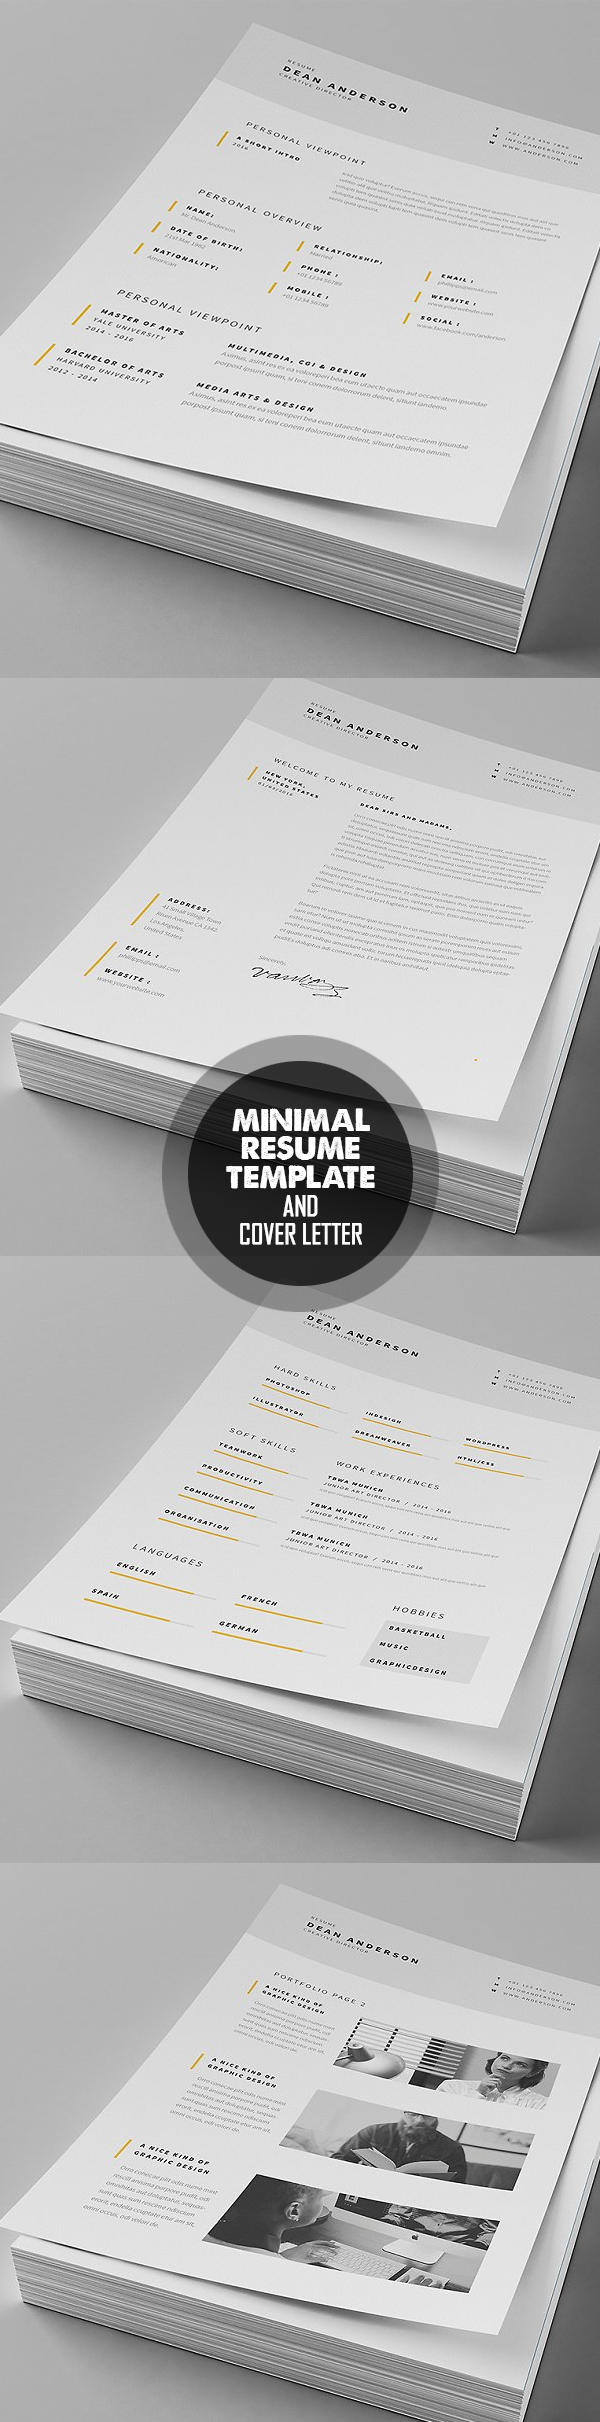 Minimal Resume   Cover Letter Template #resumedesign